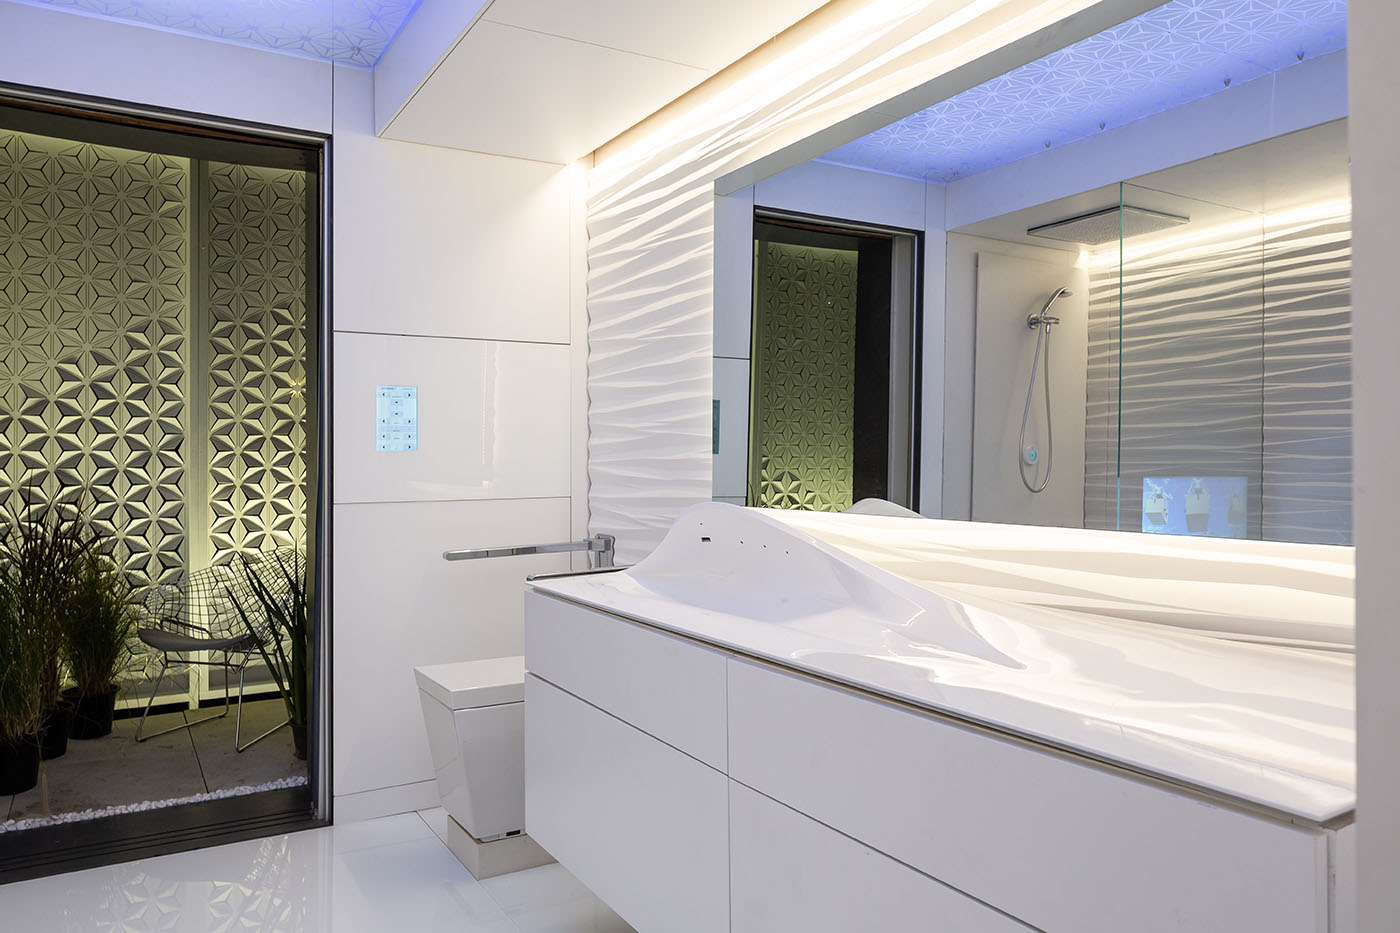 FutureHAUS bathroom with height-adjustable bathroom cabinet, sink and toilet.